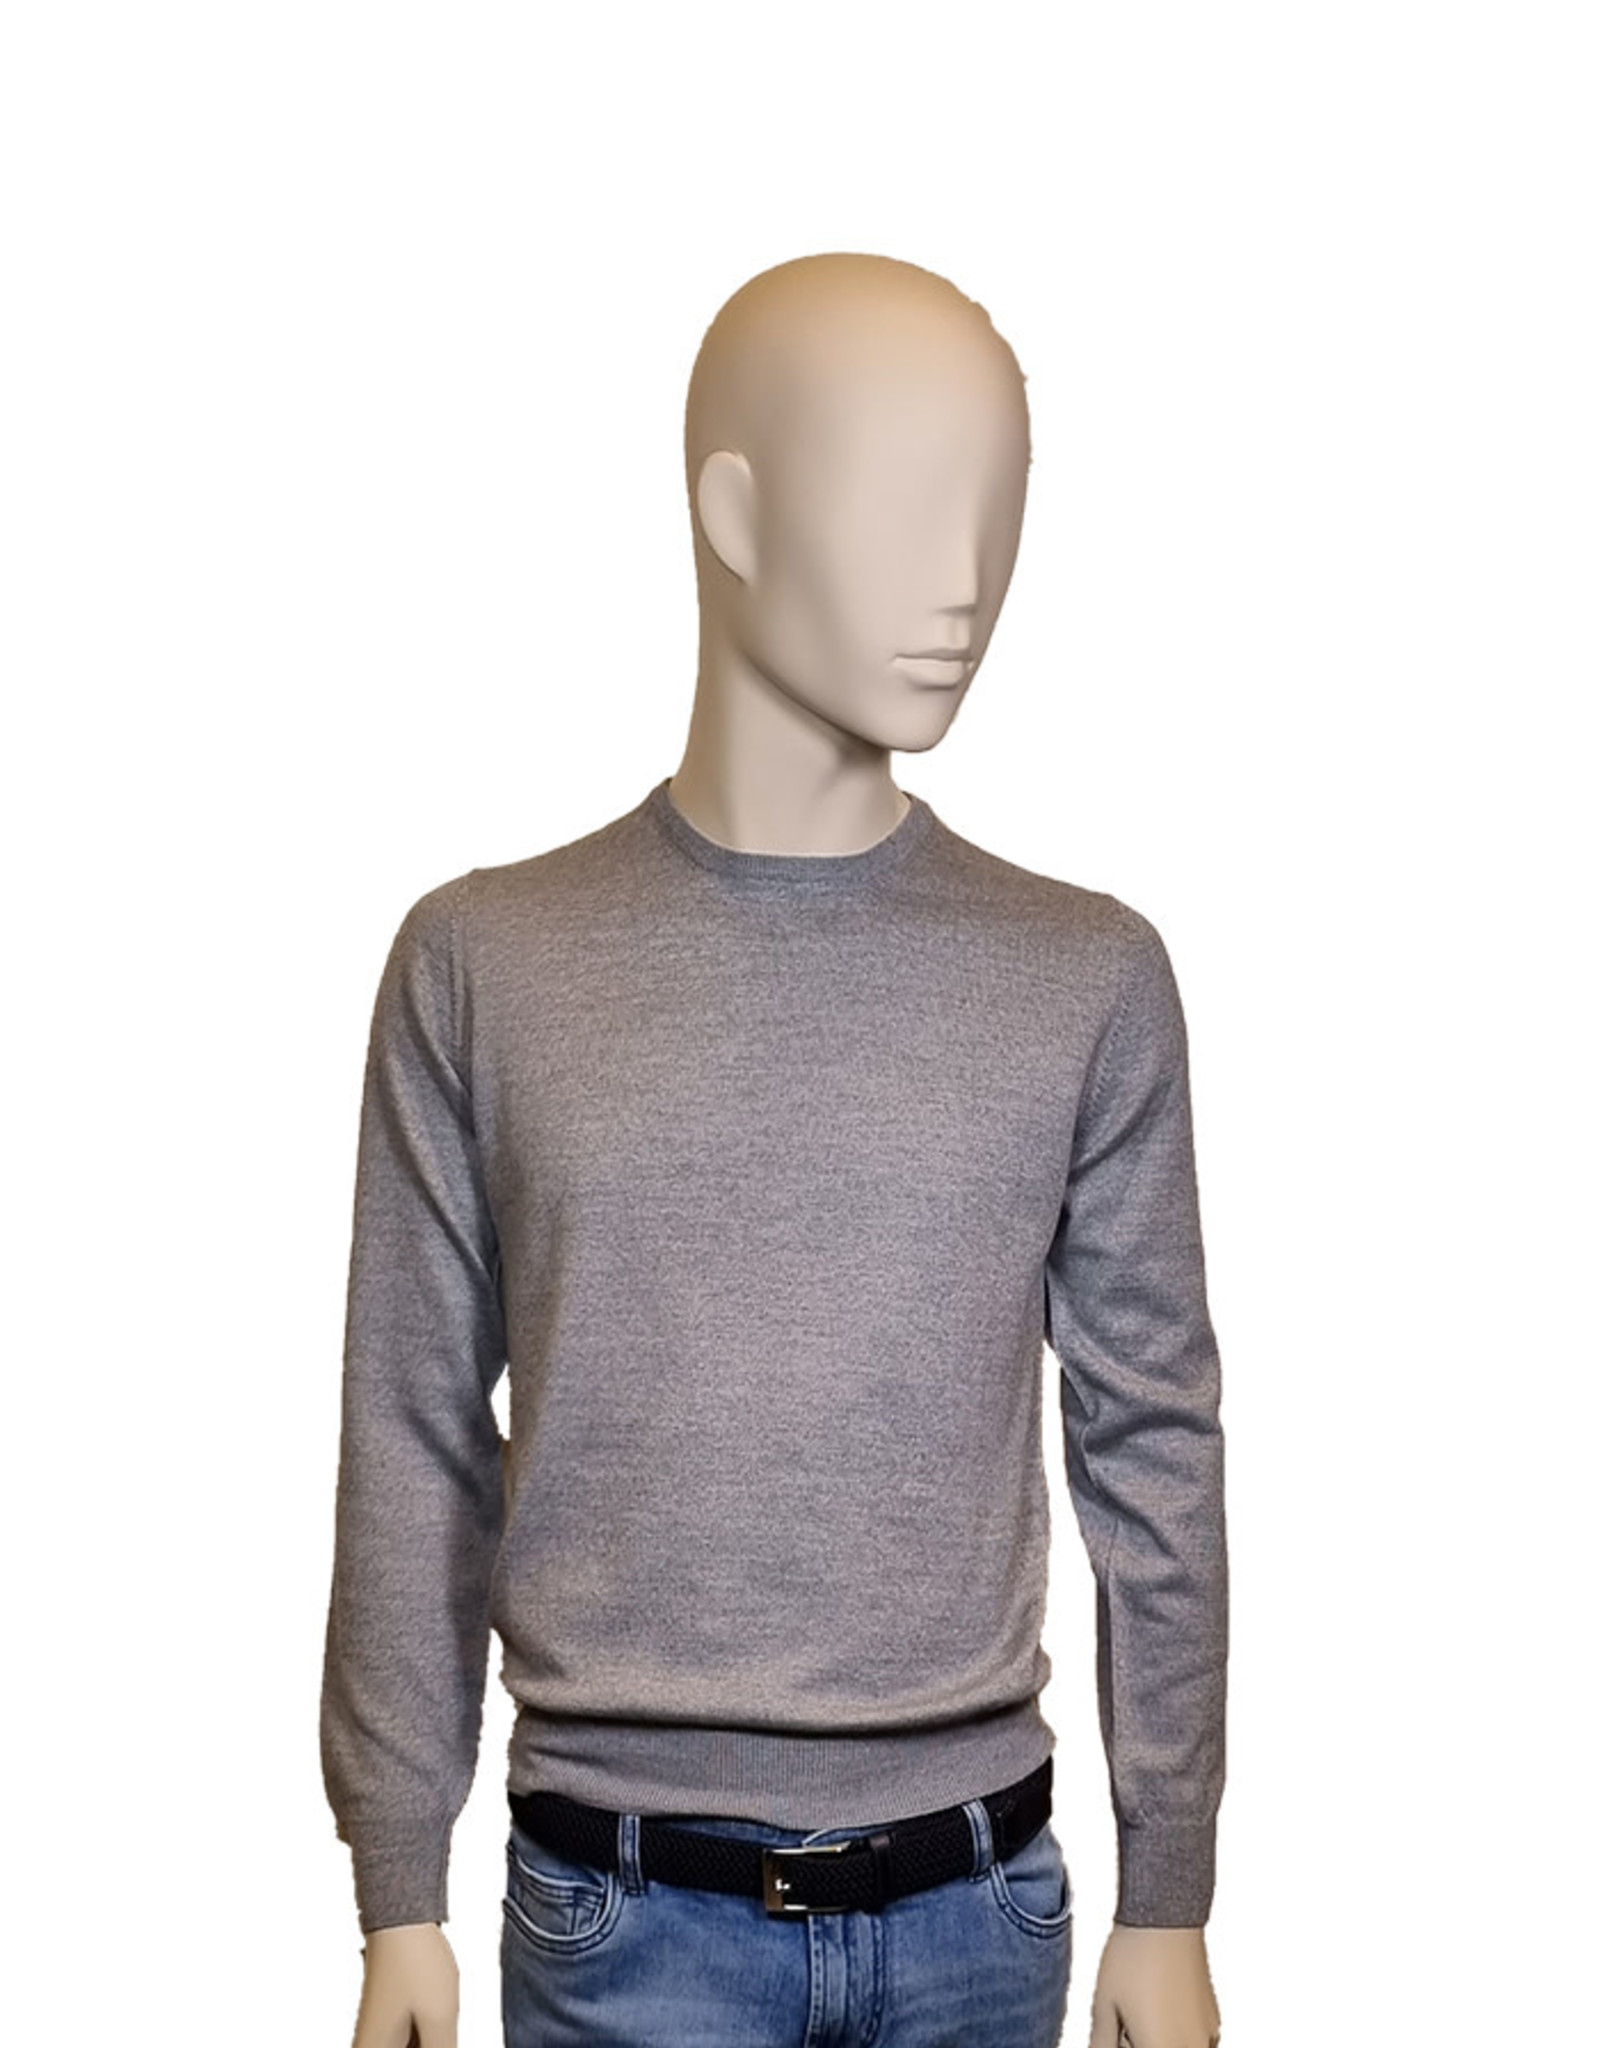 Gran Sasso Sandmore's sweater crew neck grey 14290/071 M:55167